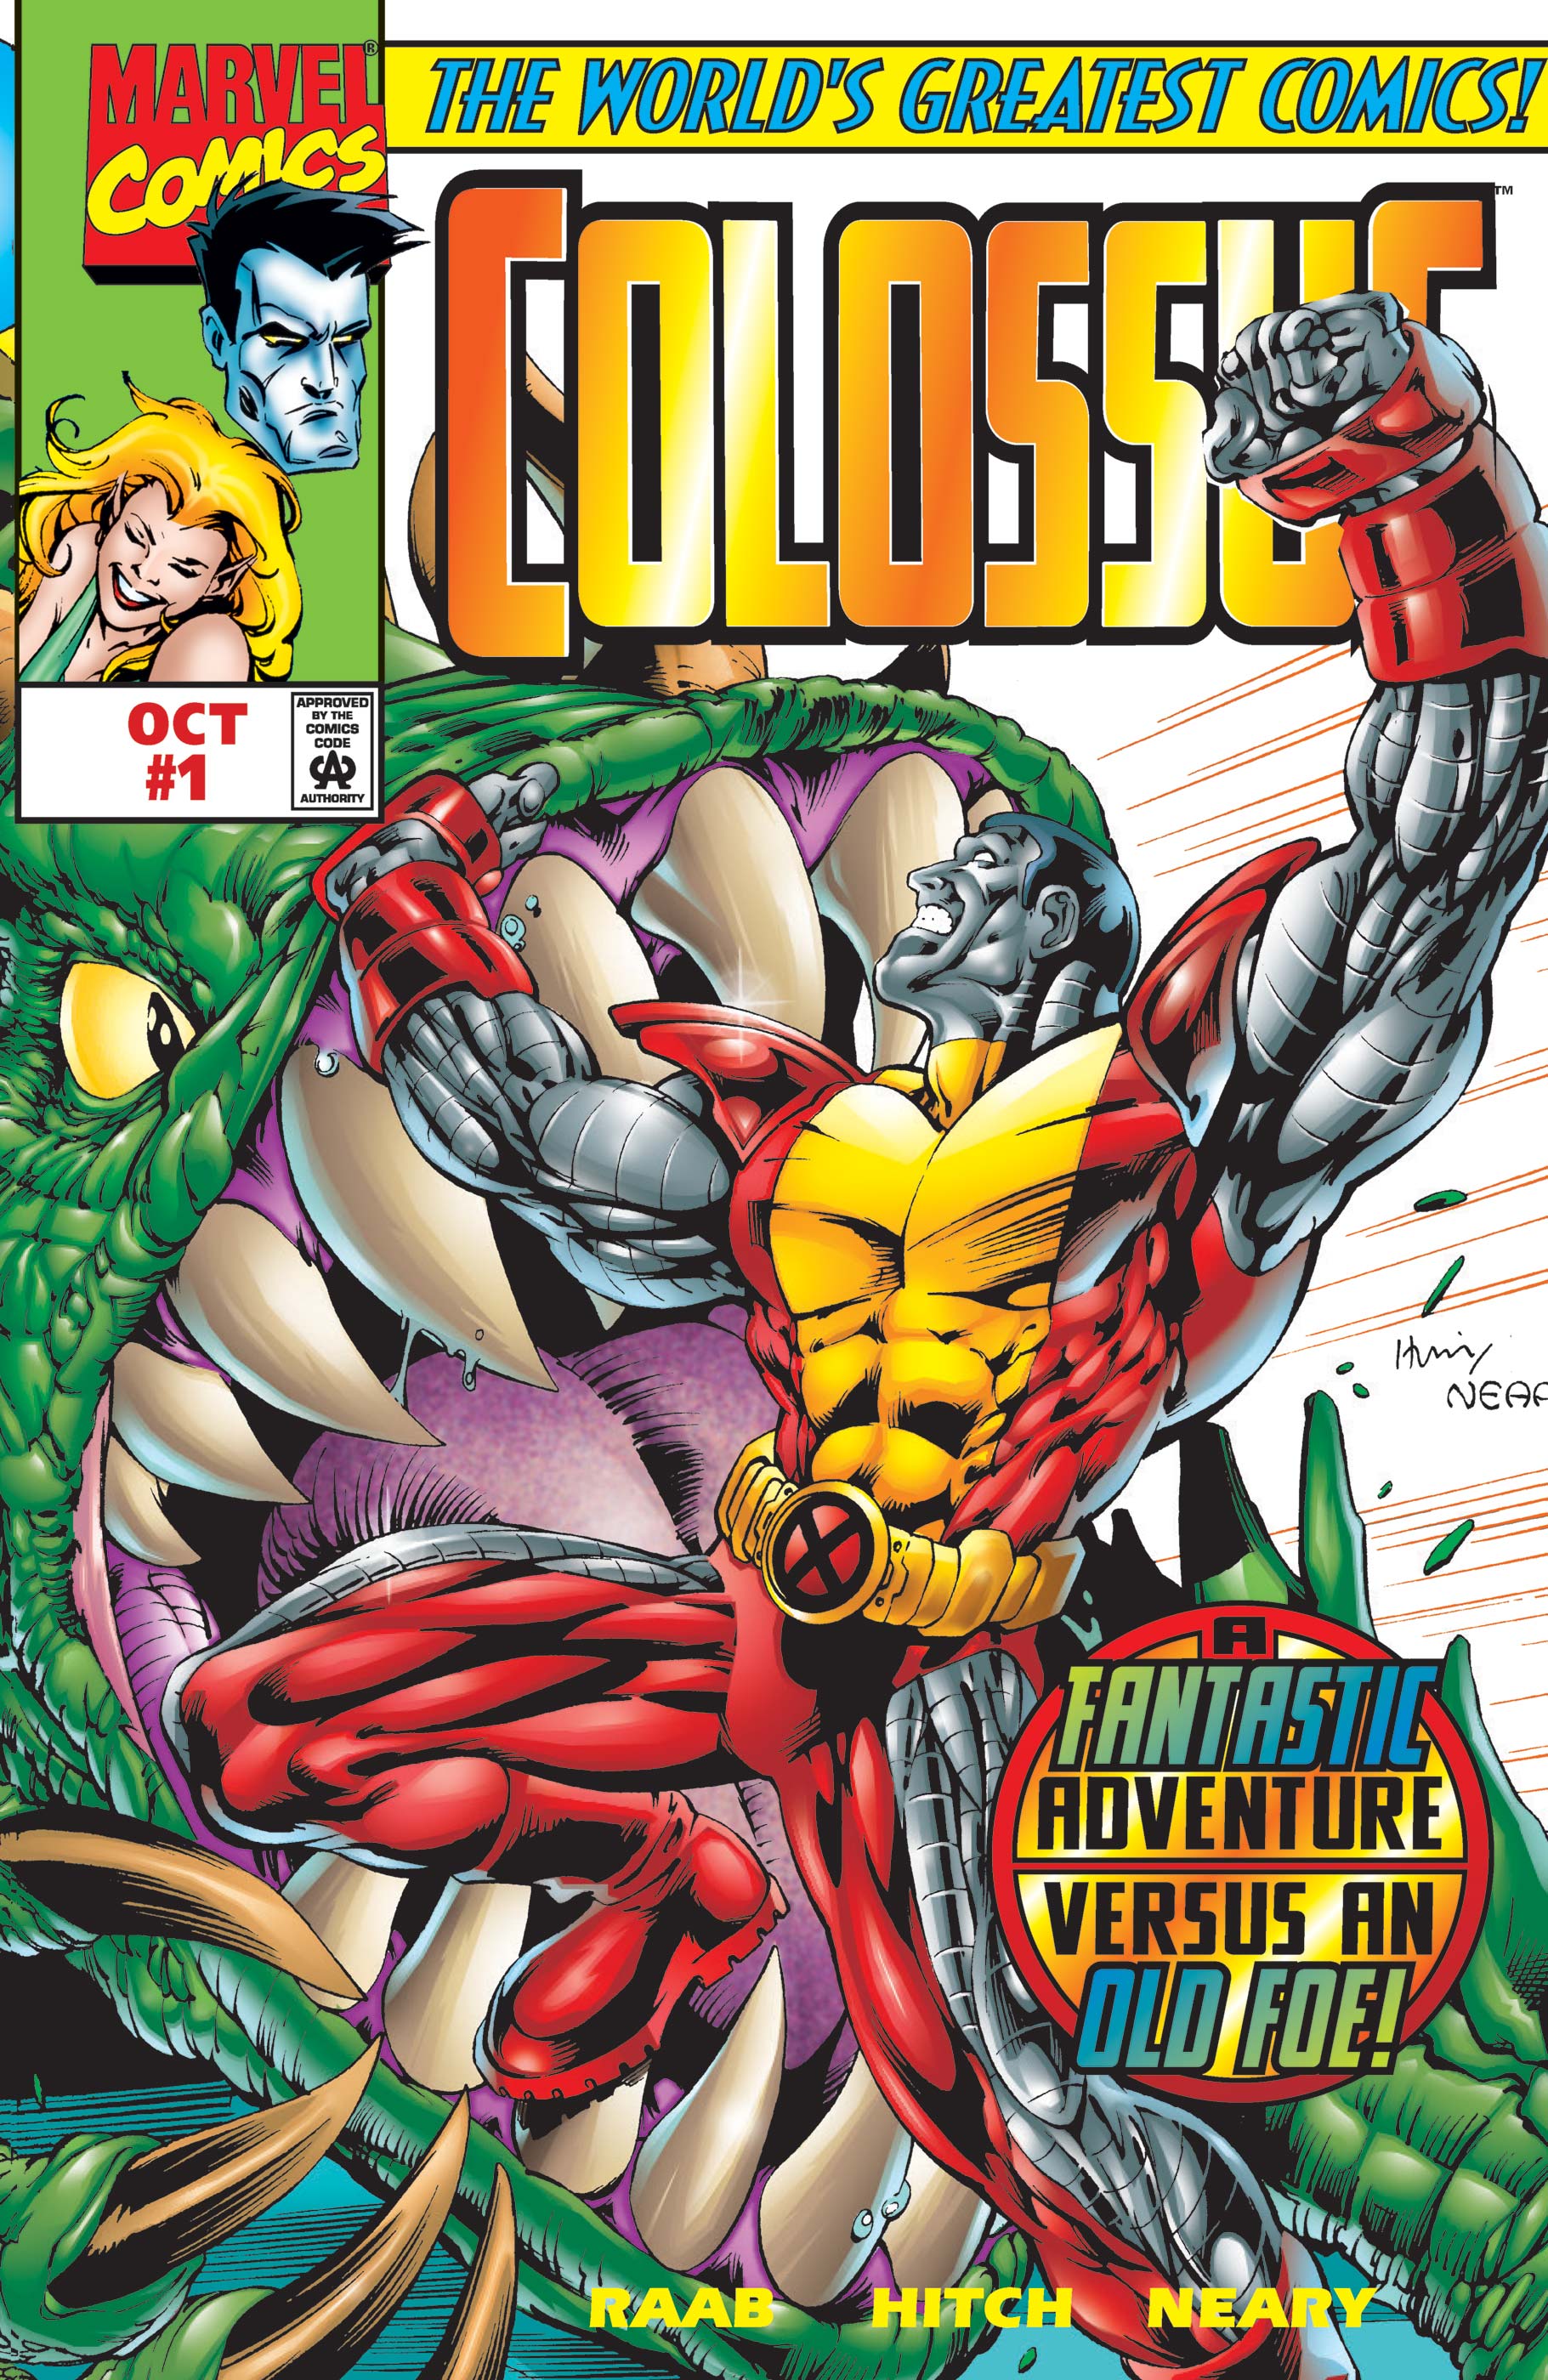 Colossus #1